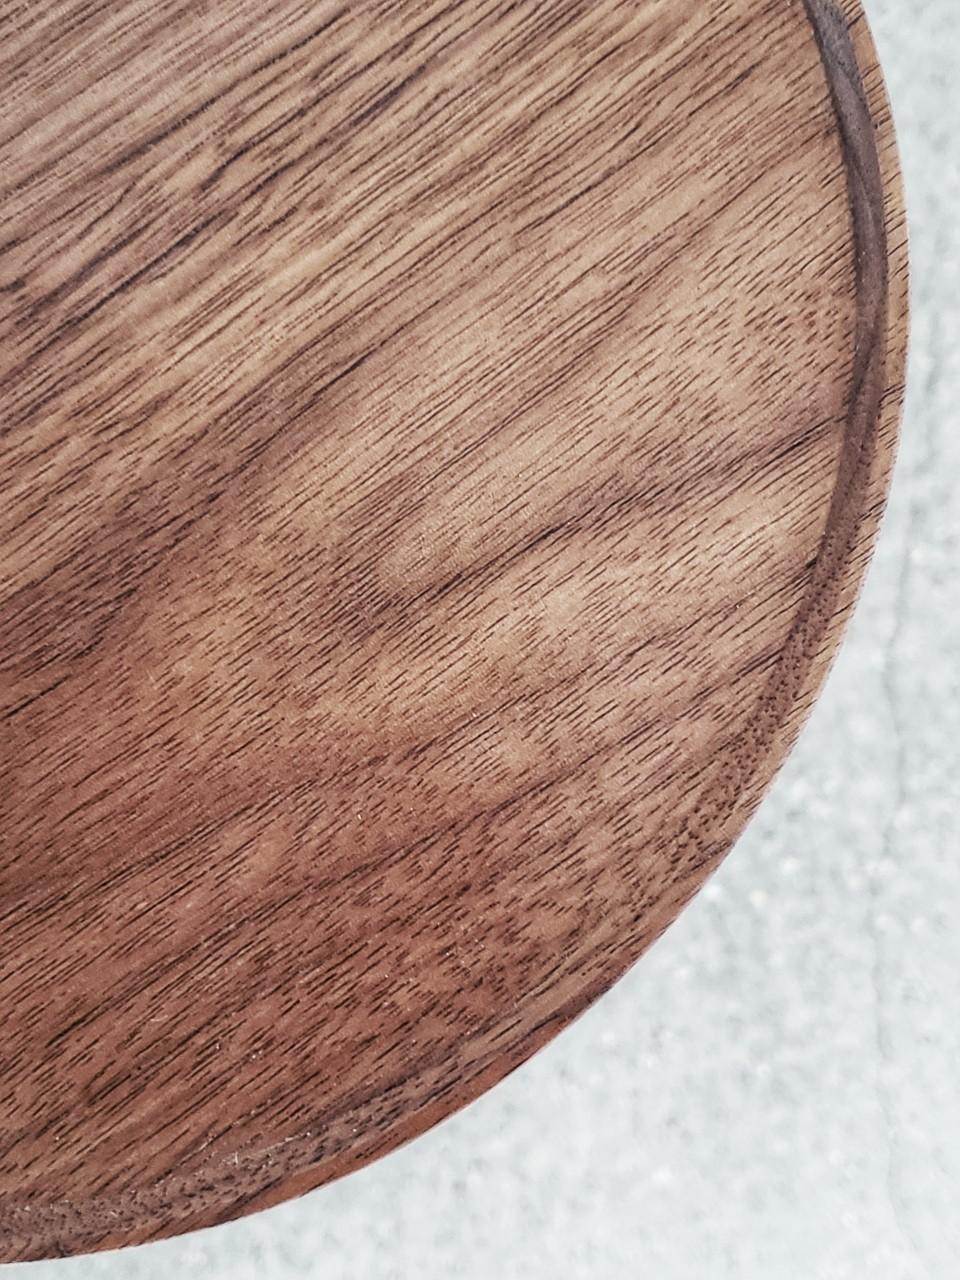 Organic Modern 21st Century Walnut / Stone Table by Designer Michael Javidi For Sale